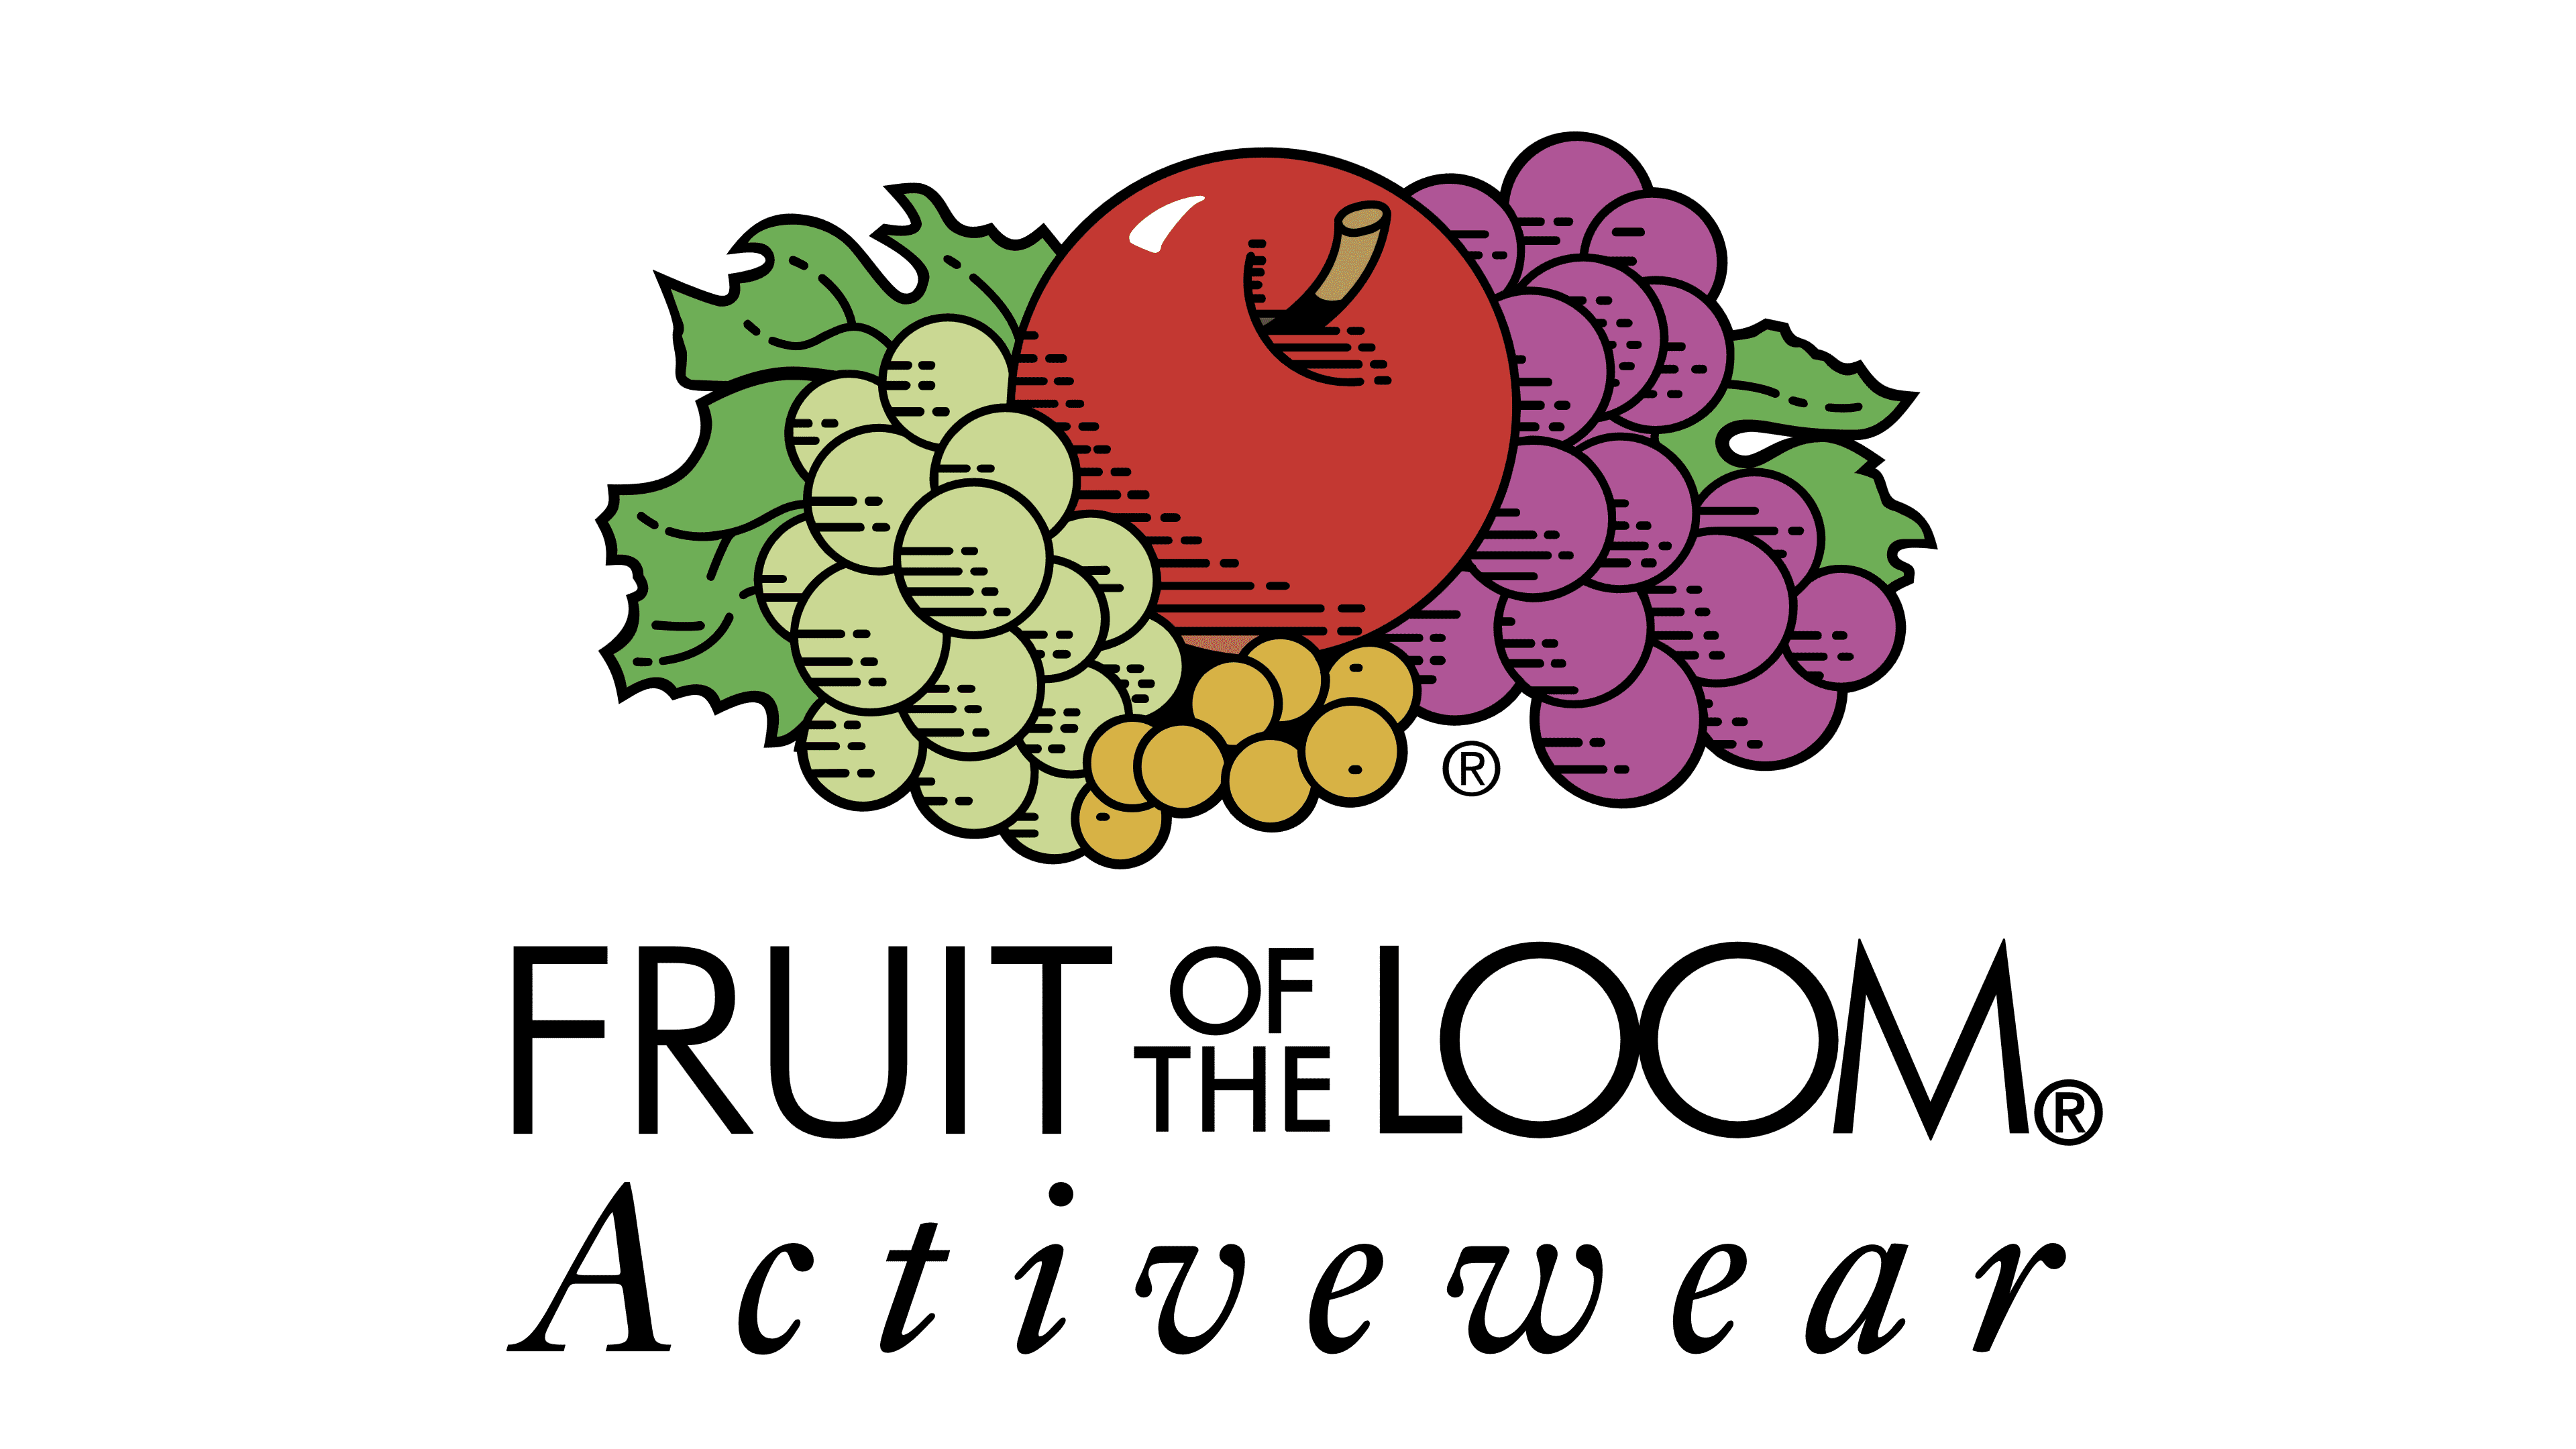 mandela effect fruit of the loom